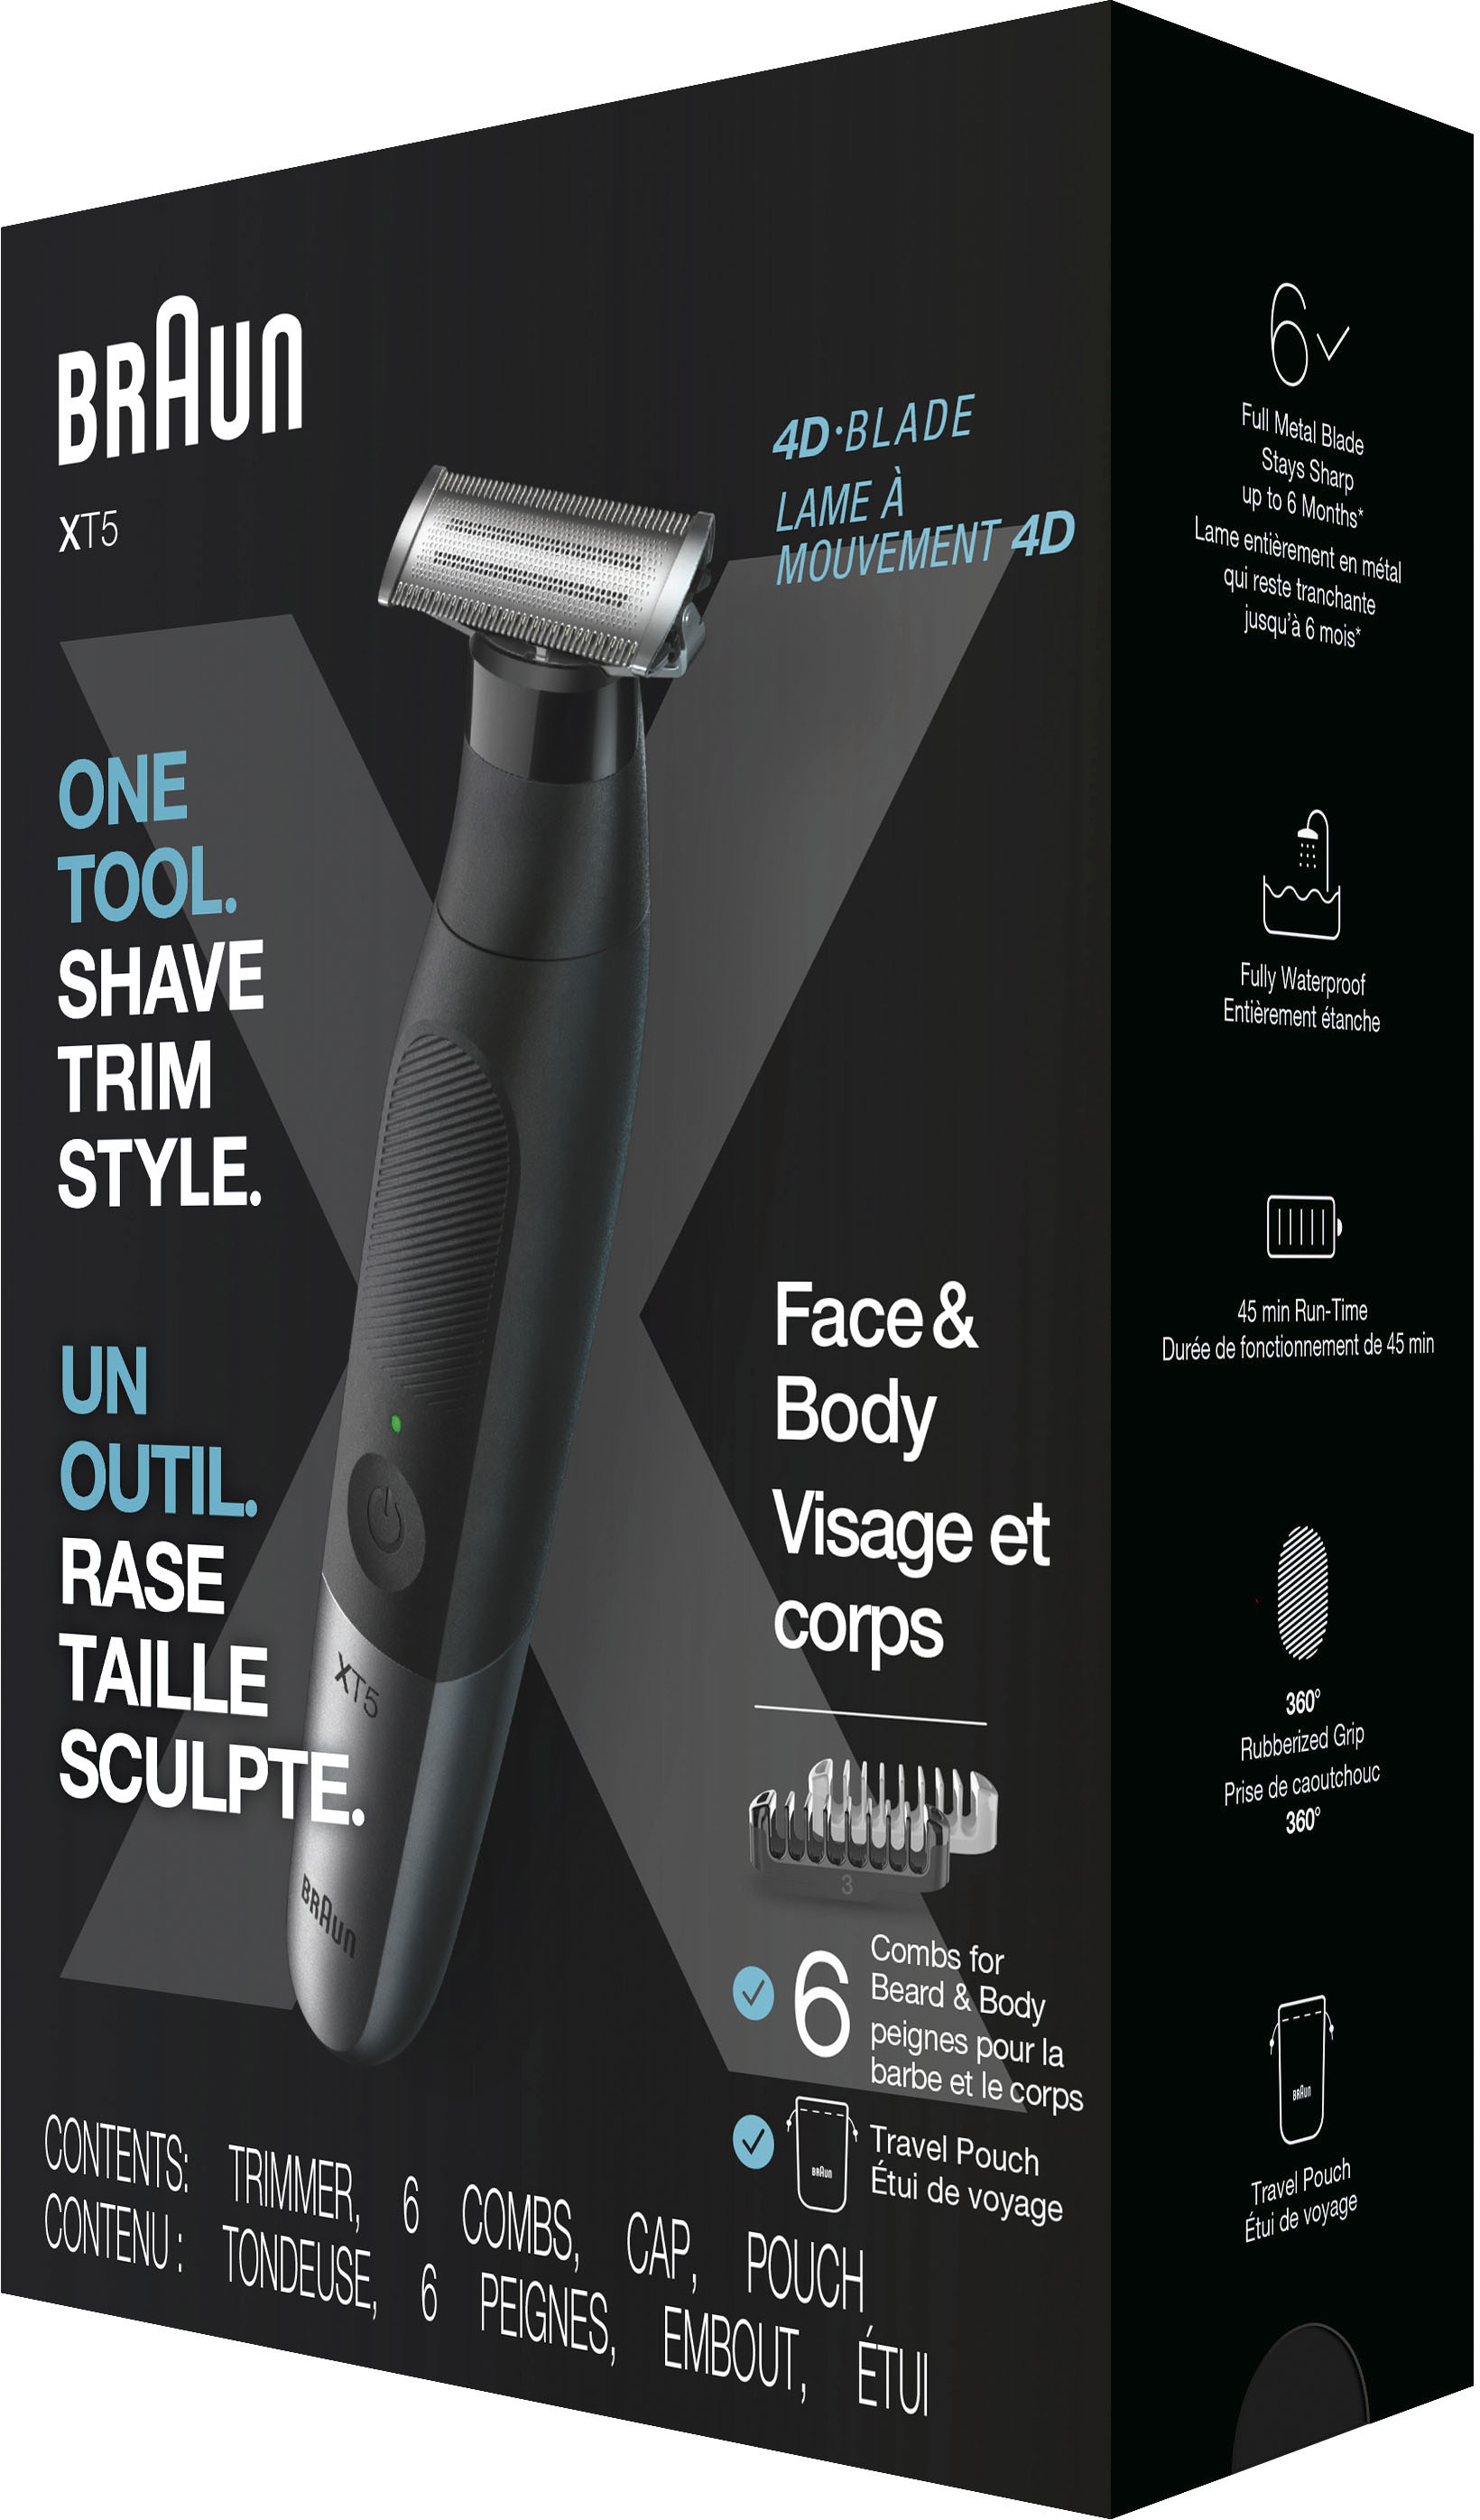 Acquista Braun One Tool Shave Trim Style Face & Body XT5 · Italia